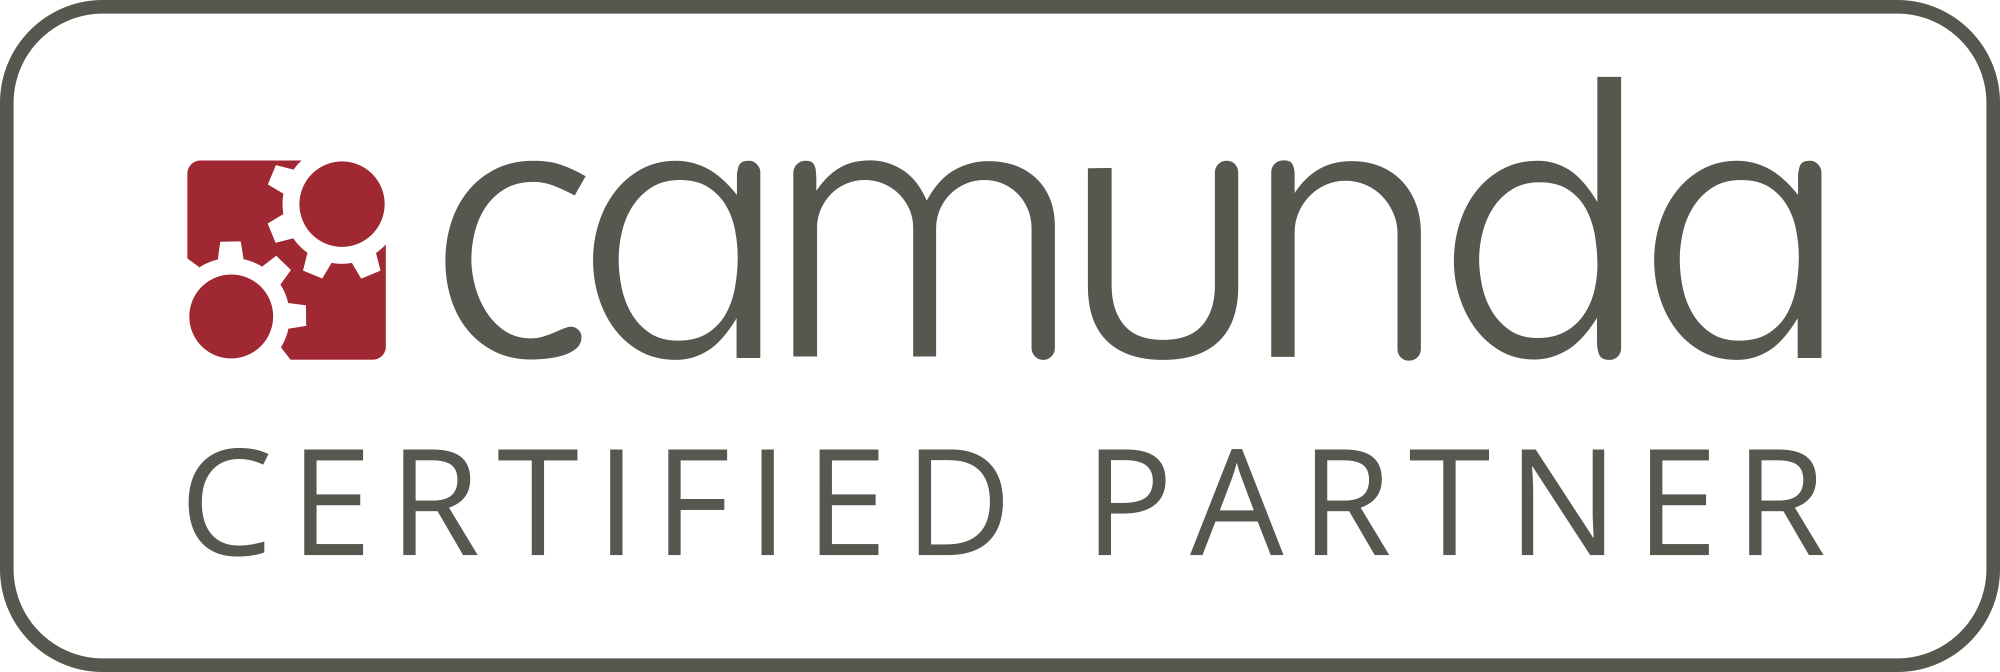 camunda-certified-partner-logo